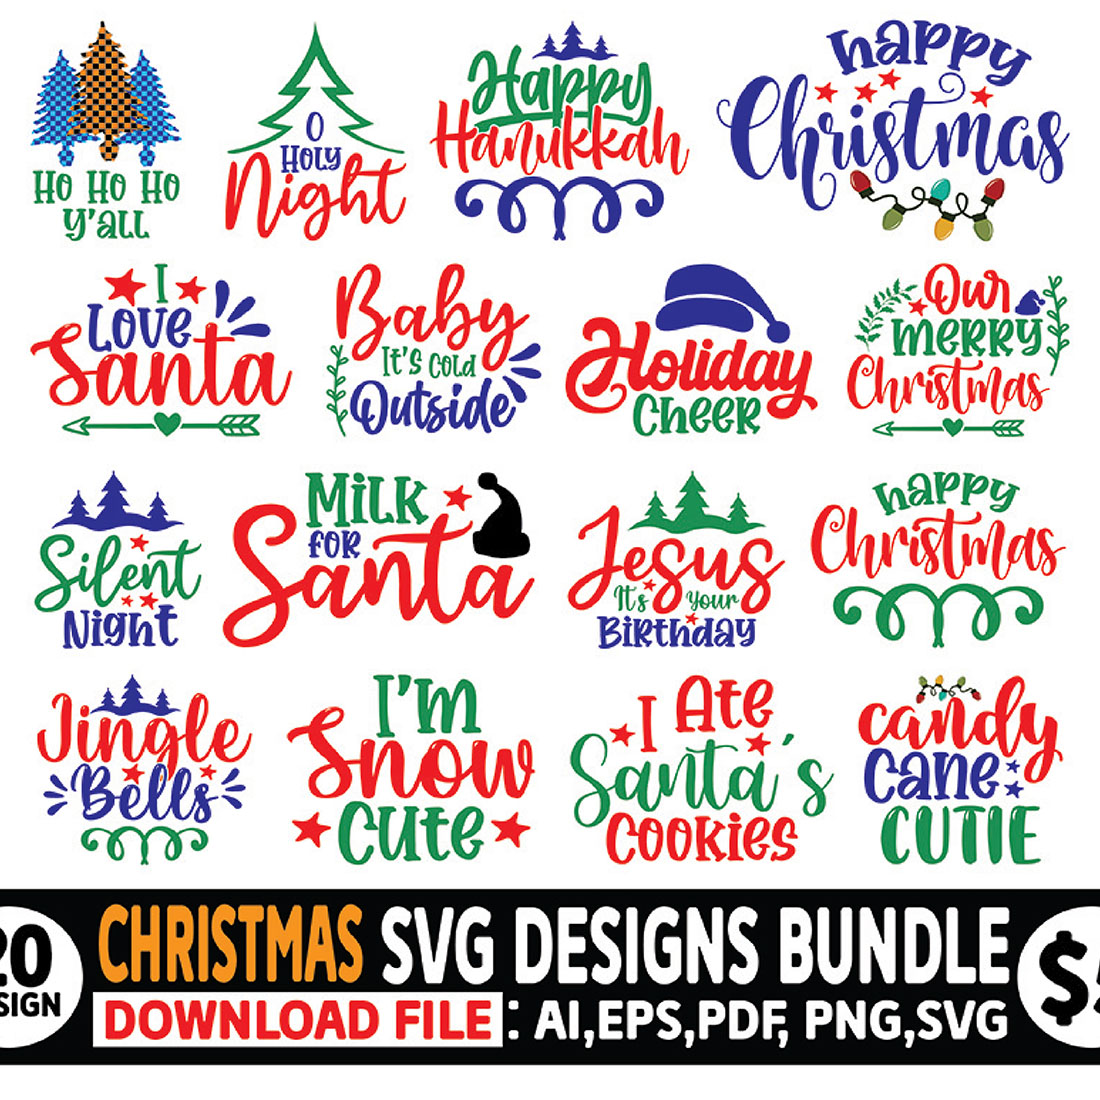 Christmas SVG Designs Bundle main cover image.